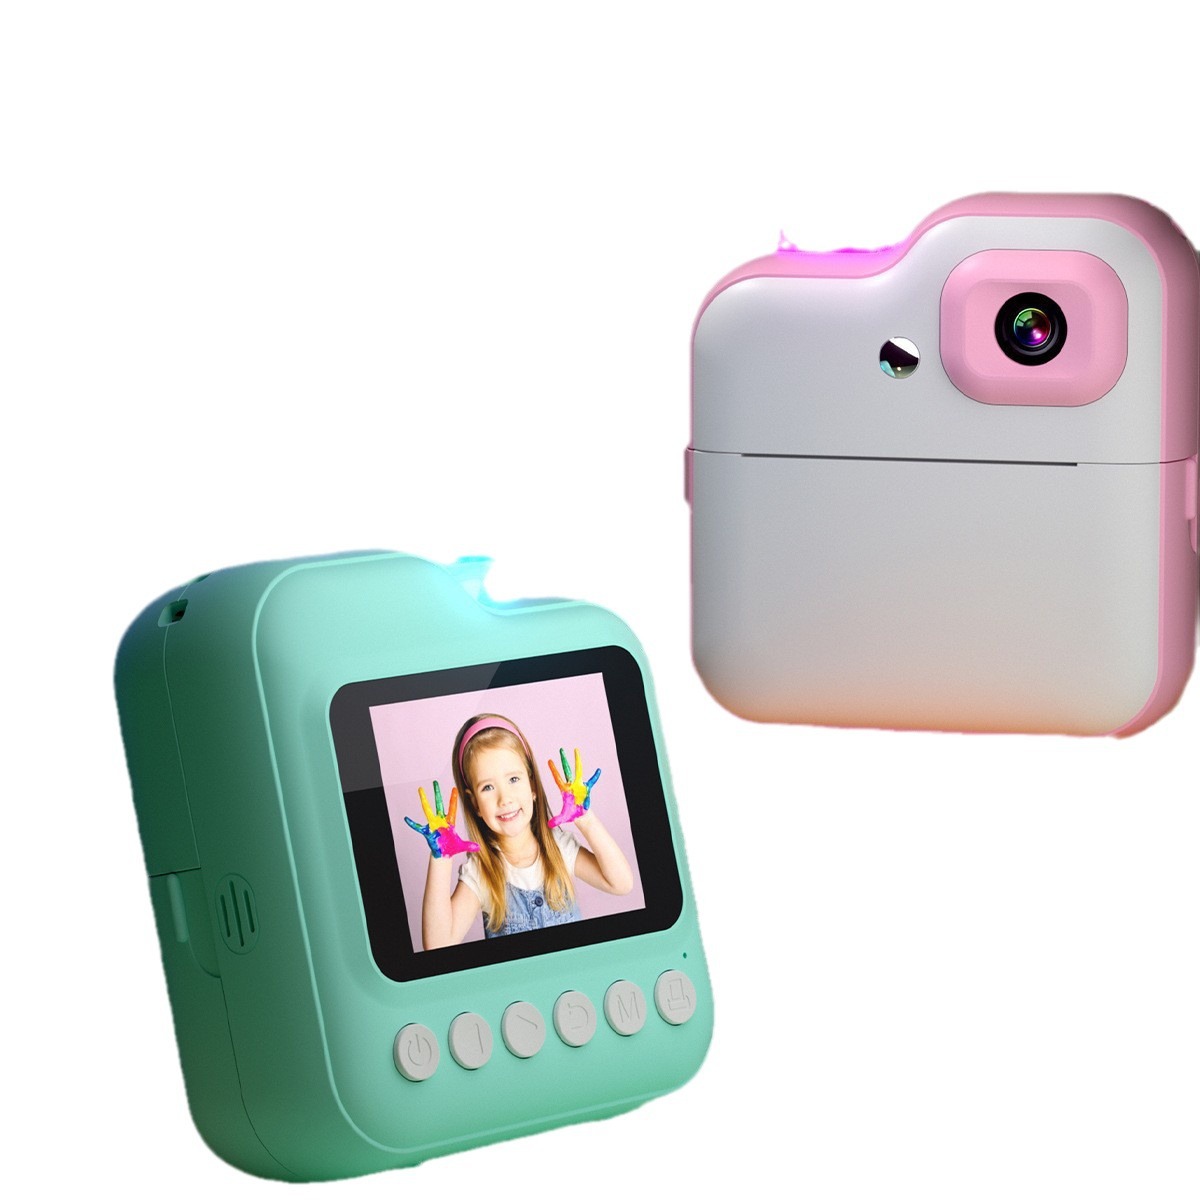 New Polaroid Children's Digital Camera Cute Cartoon Mini Kids Toy Hd Print Camera Gift